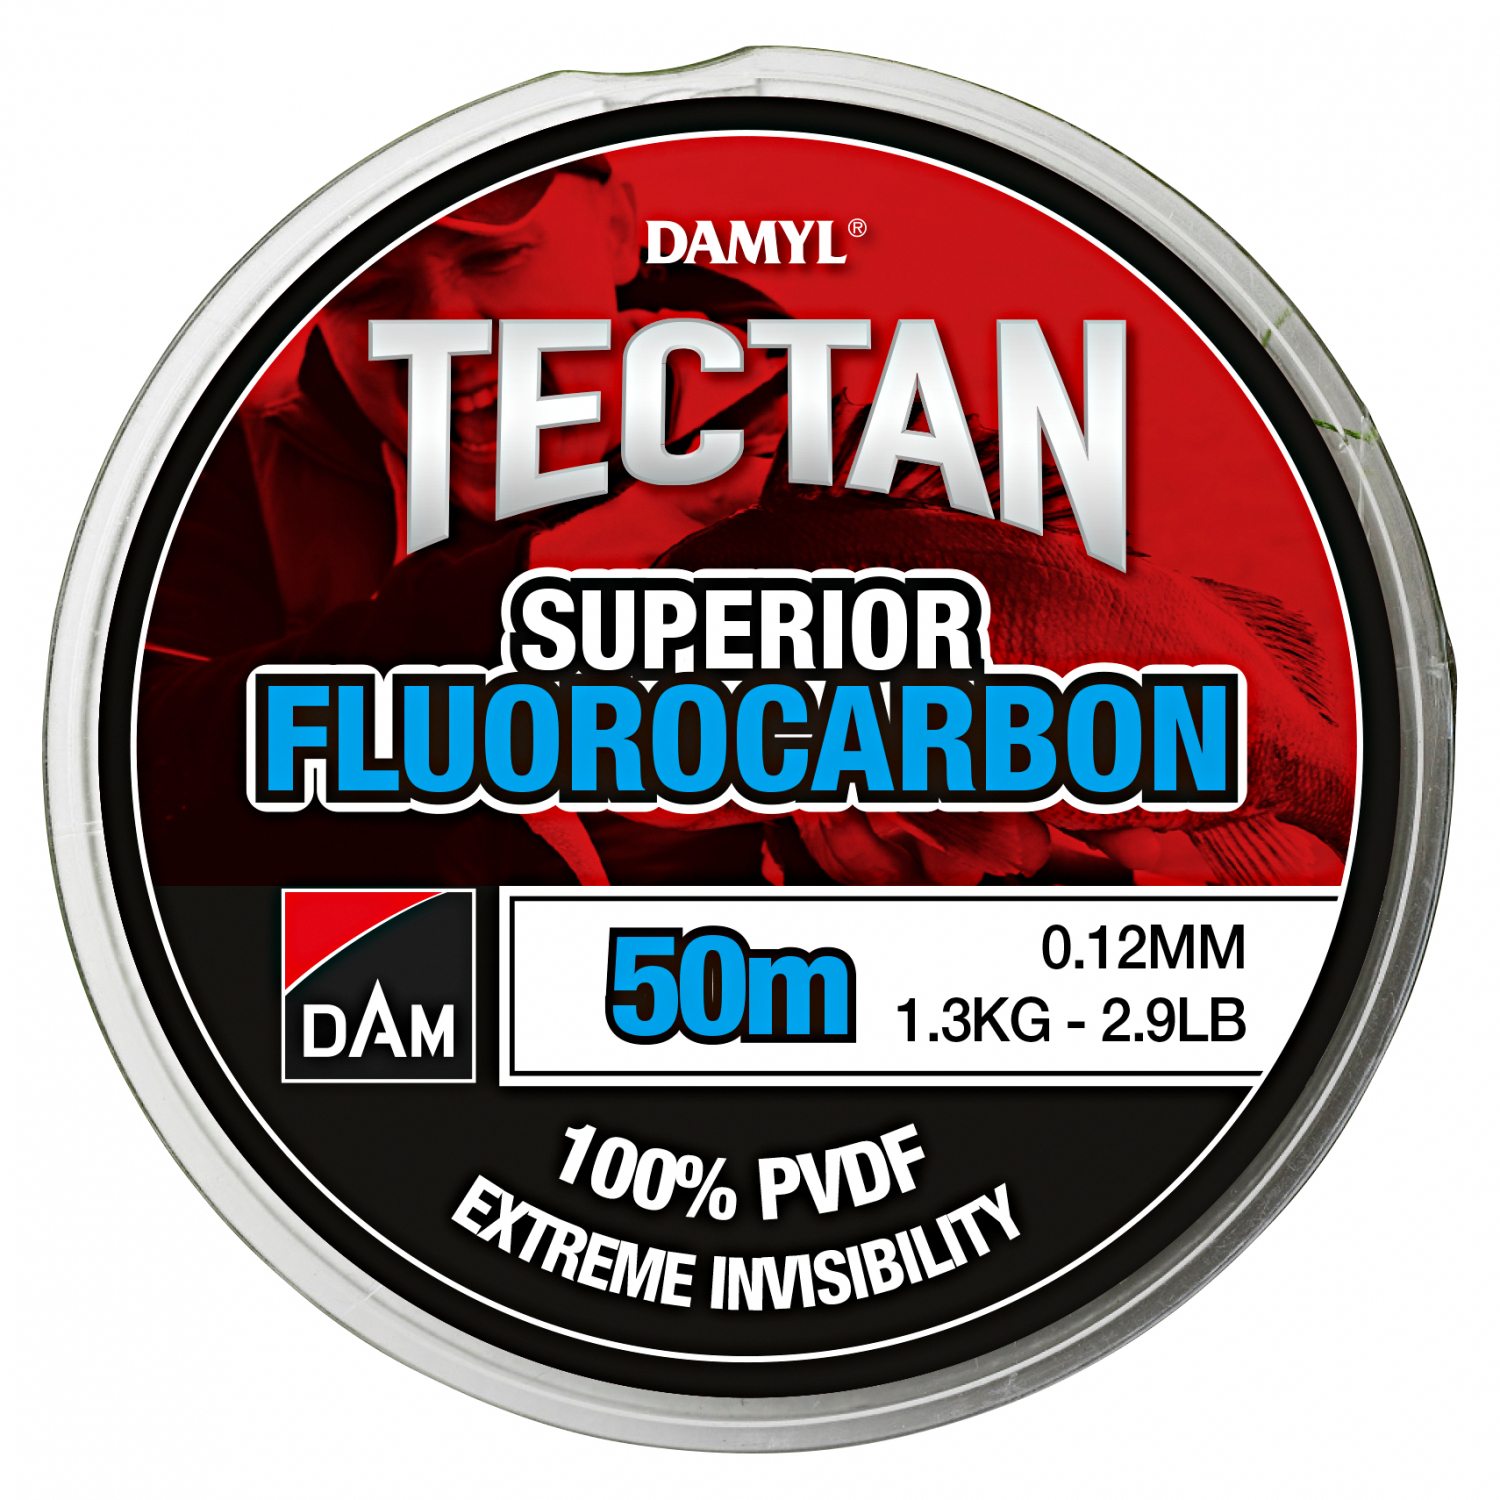 DAM DAM Angelschnur Damyl Tectan Superior Fluorocarbon (transparent, 50 m) 